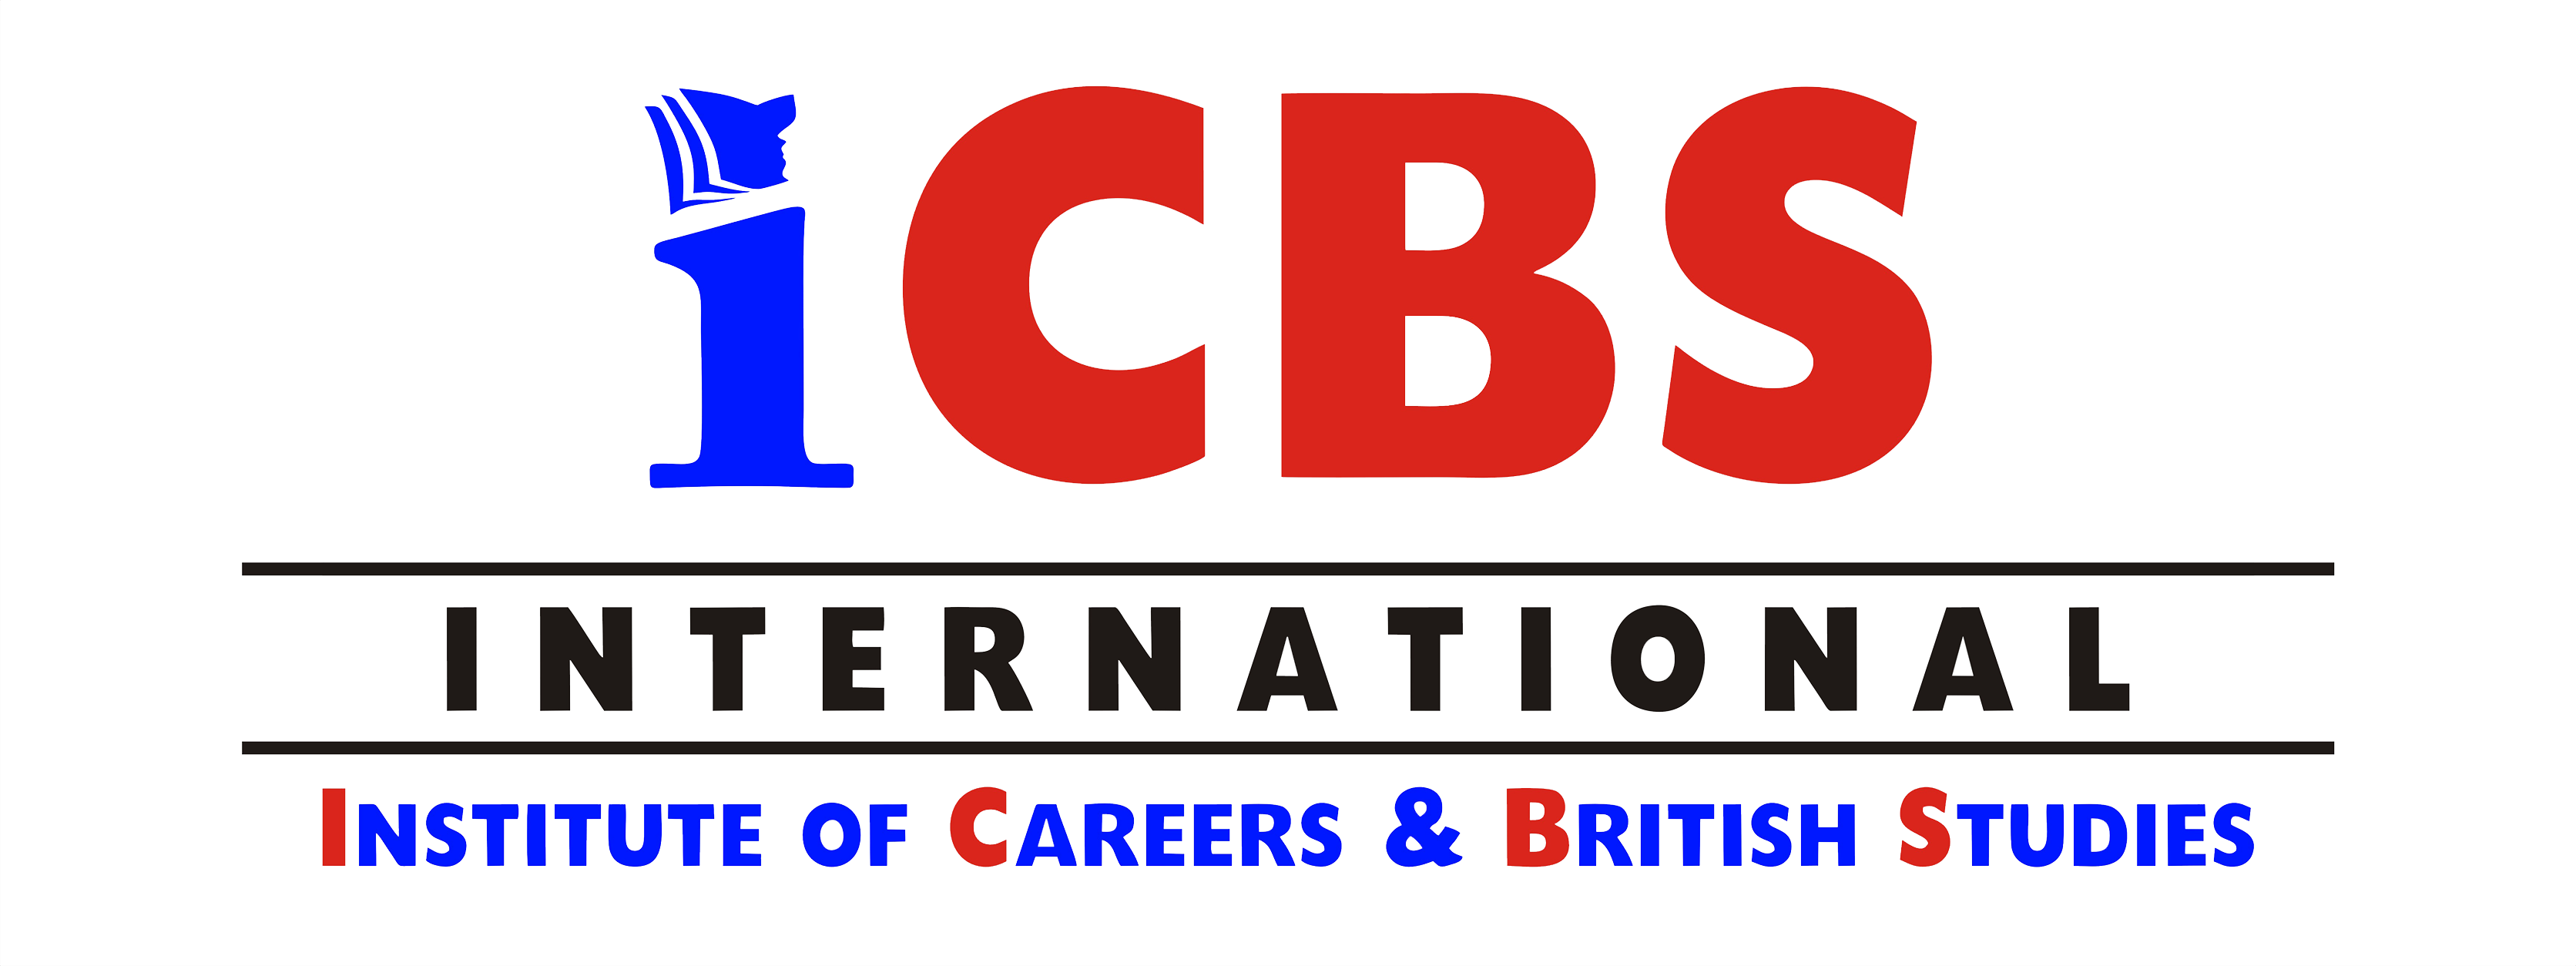 ICBS International